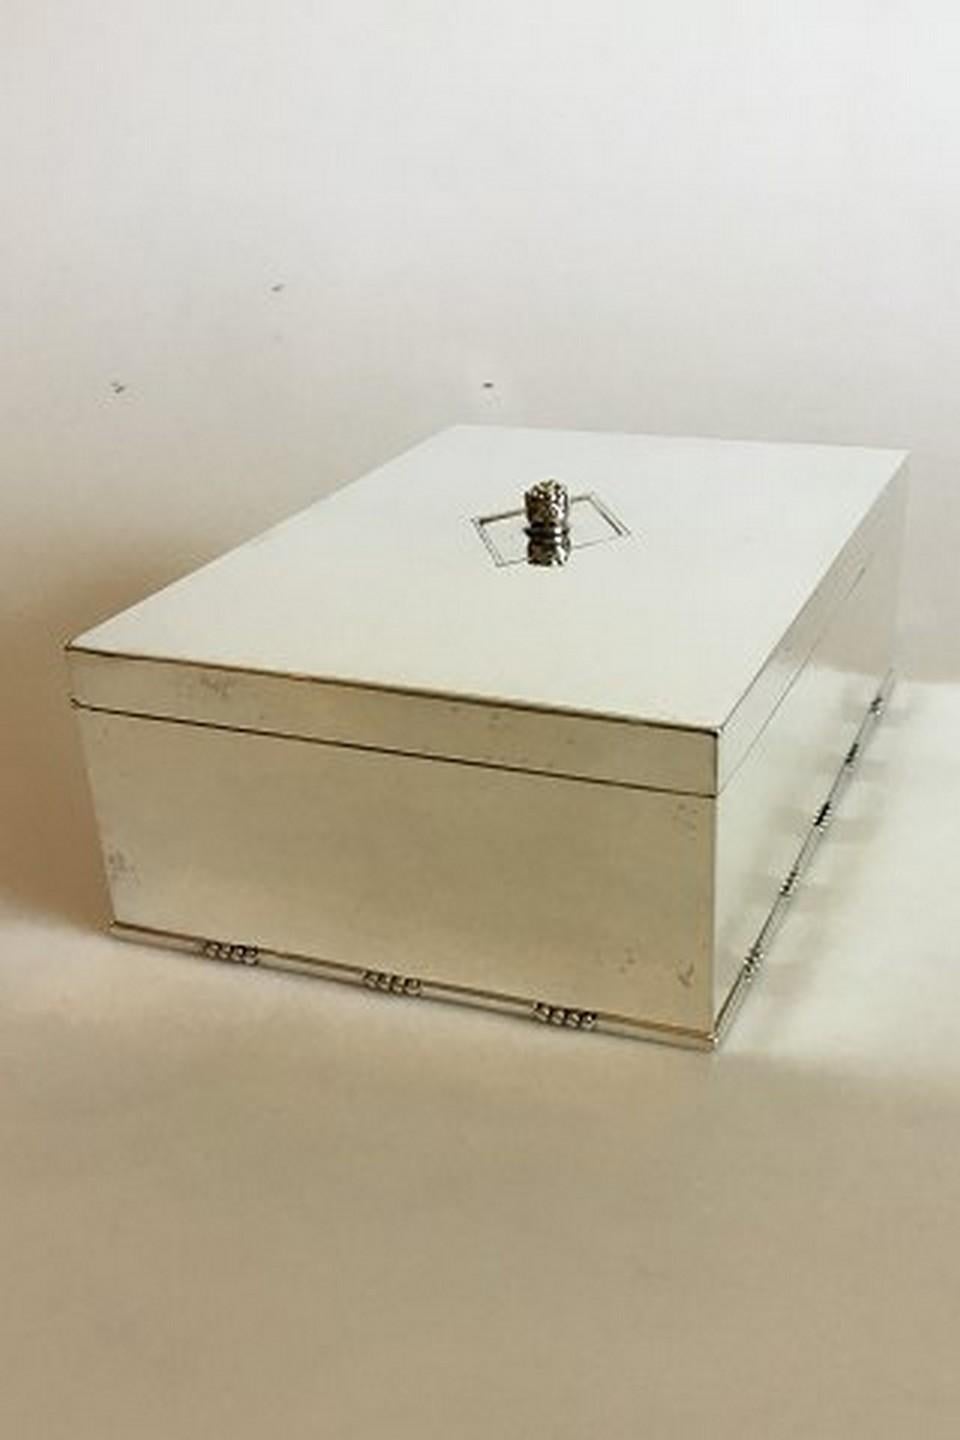 Georg Jensen sterling silver cigar box / Humidor No 329B. Measures 21 cm x 15 cm x 7.5 cm / 8 17/64 in. x 5 29/32 in. x 2 61/64 in. Weighs 1199 g / 42.35 oz.
Item no.: 334600.